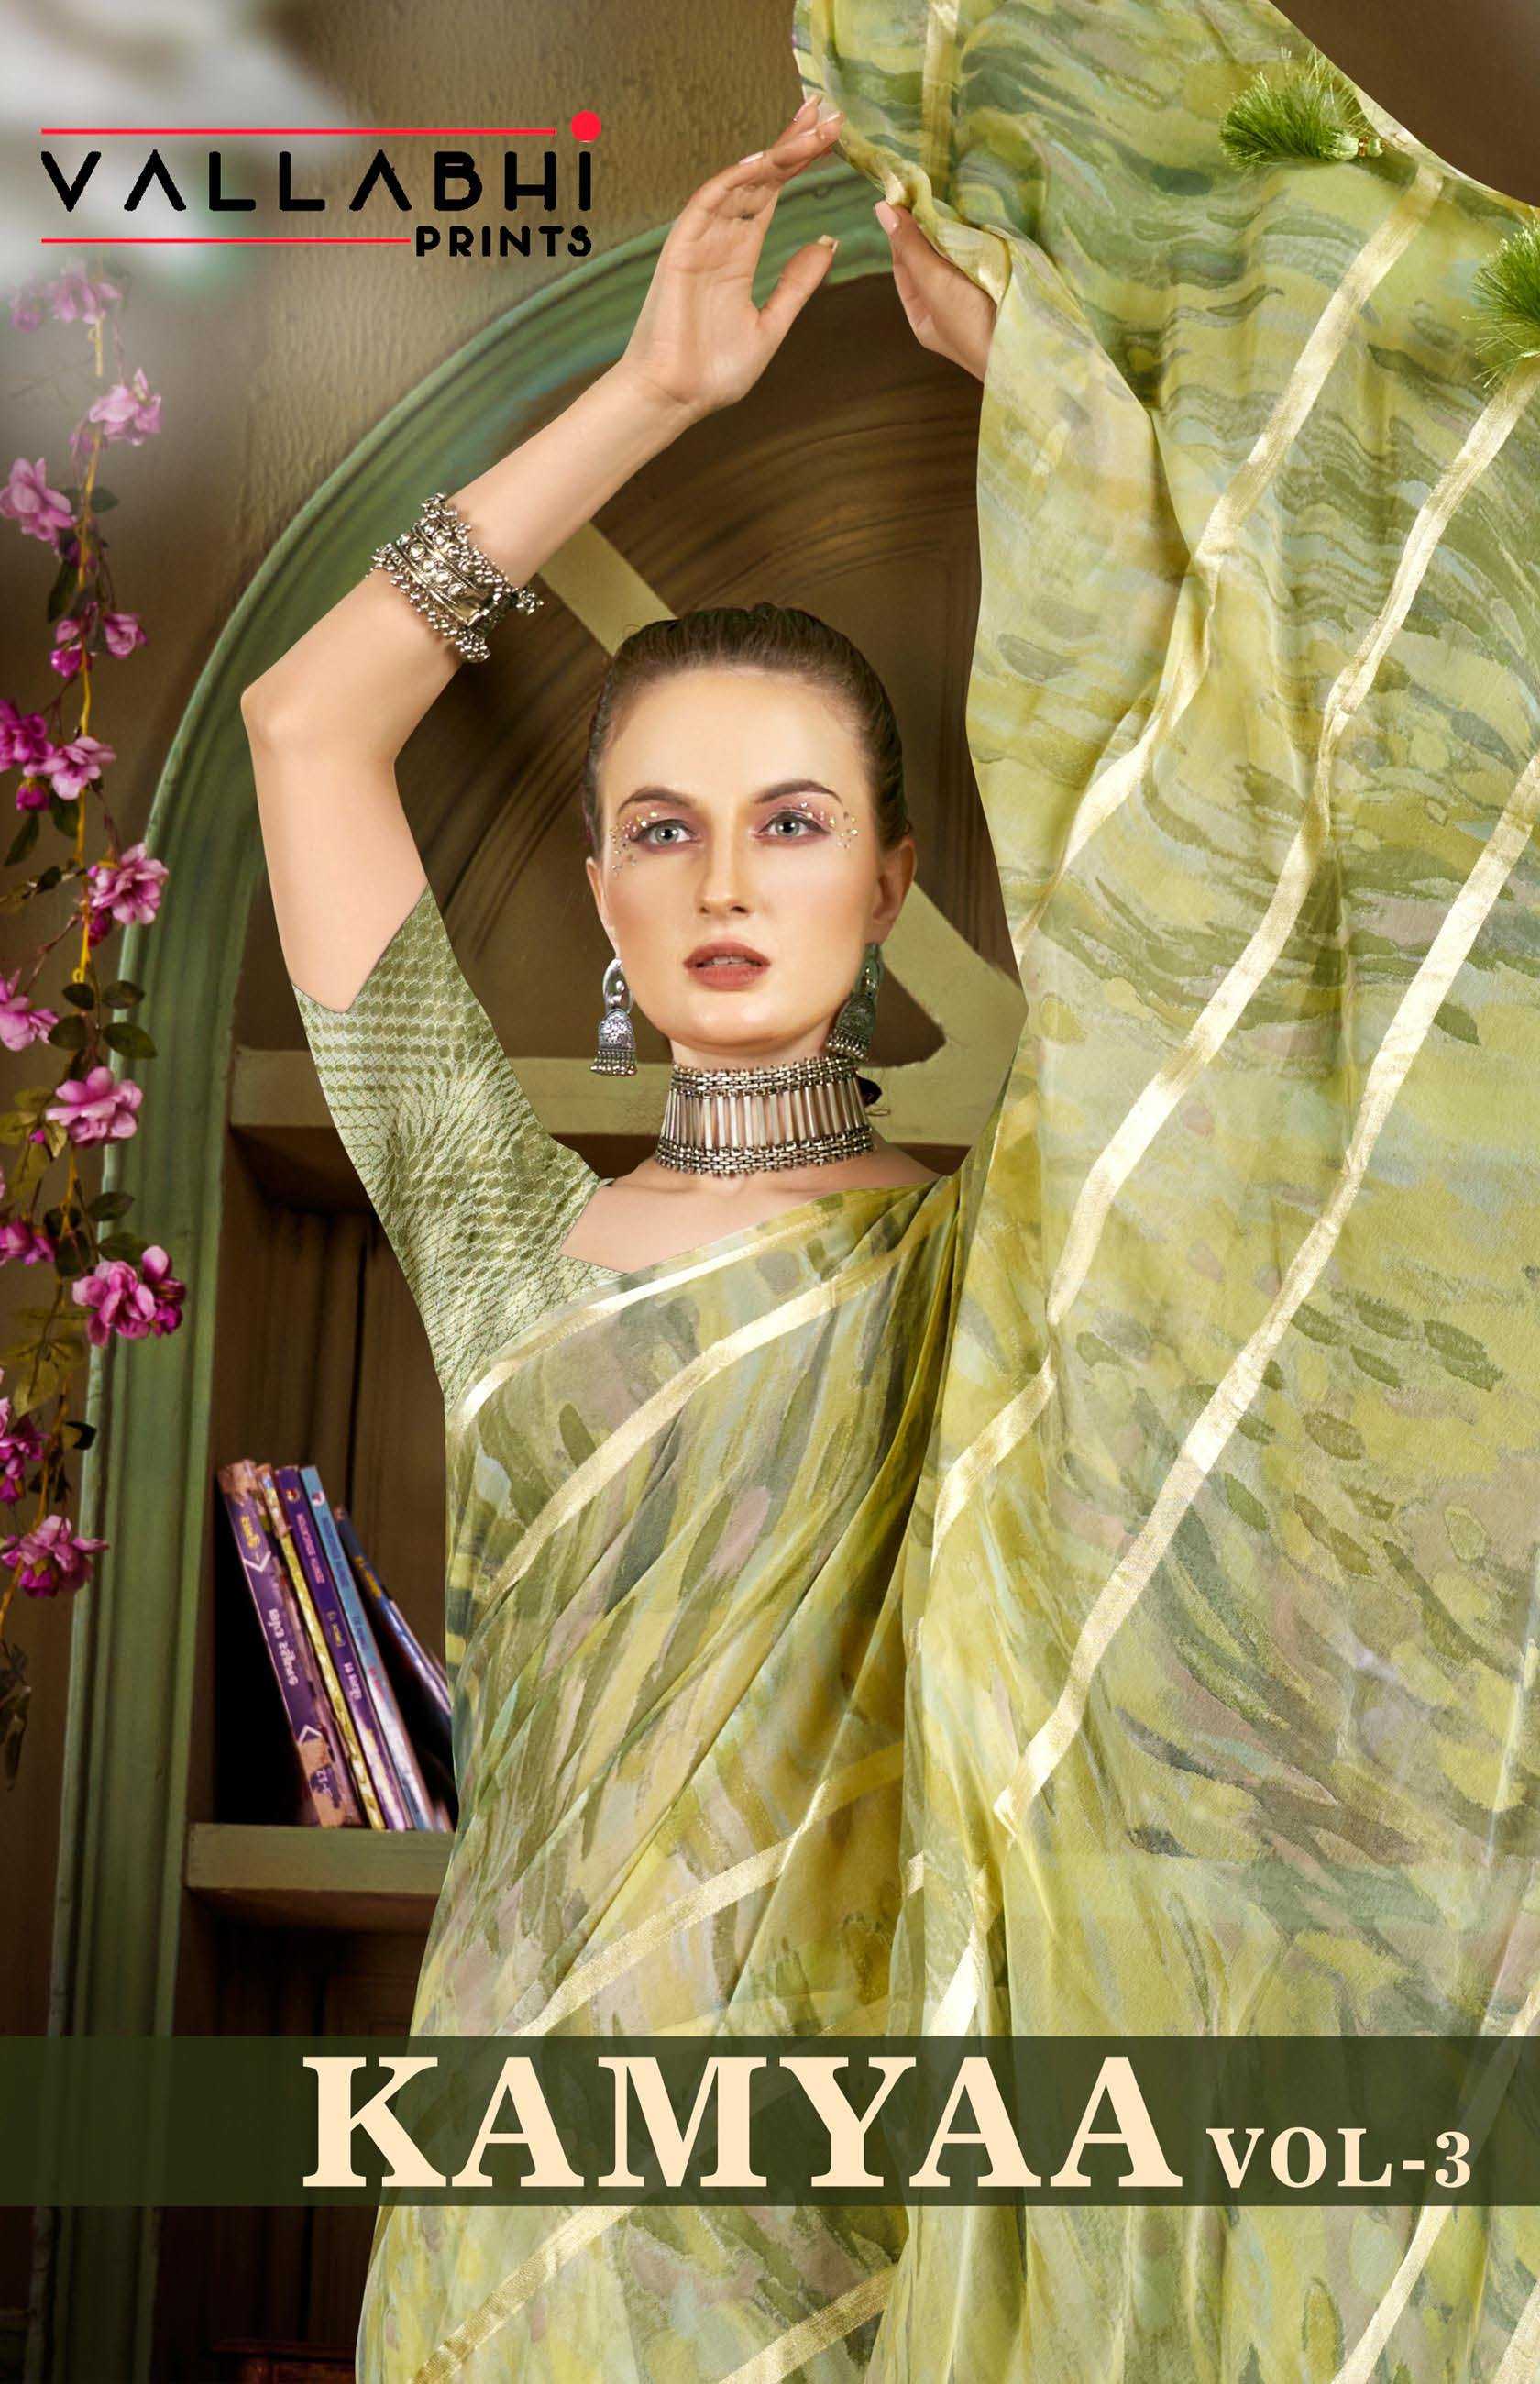 vallabhi prints presents kamyaa vol 3 trendy outfit georgette fancy comfy wear saree 